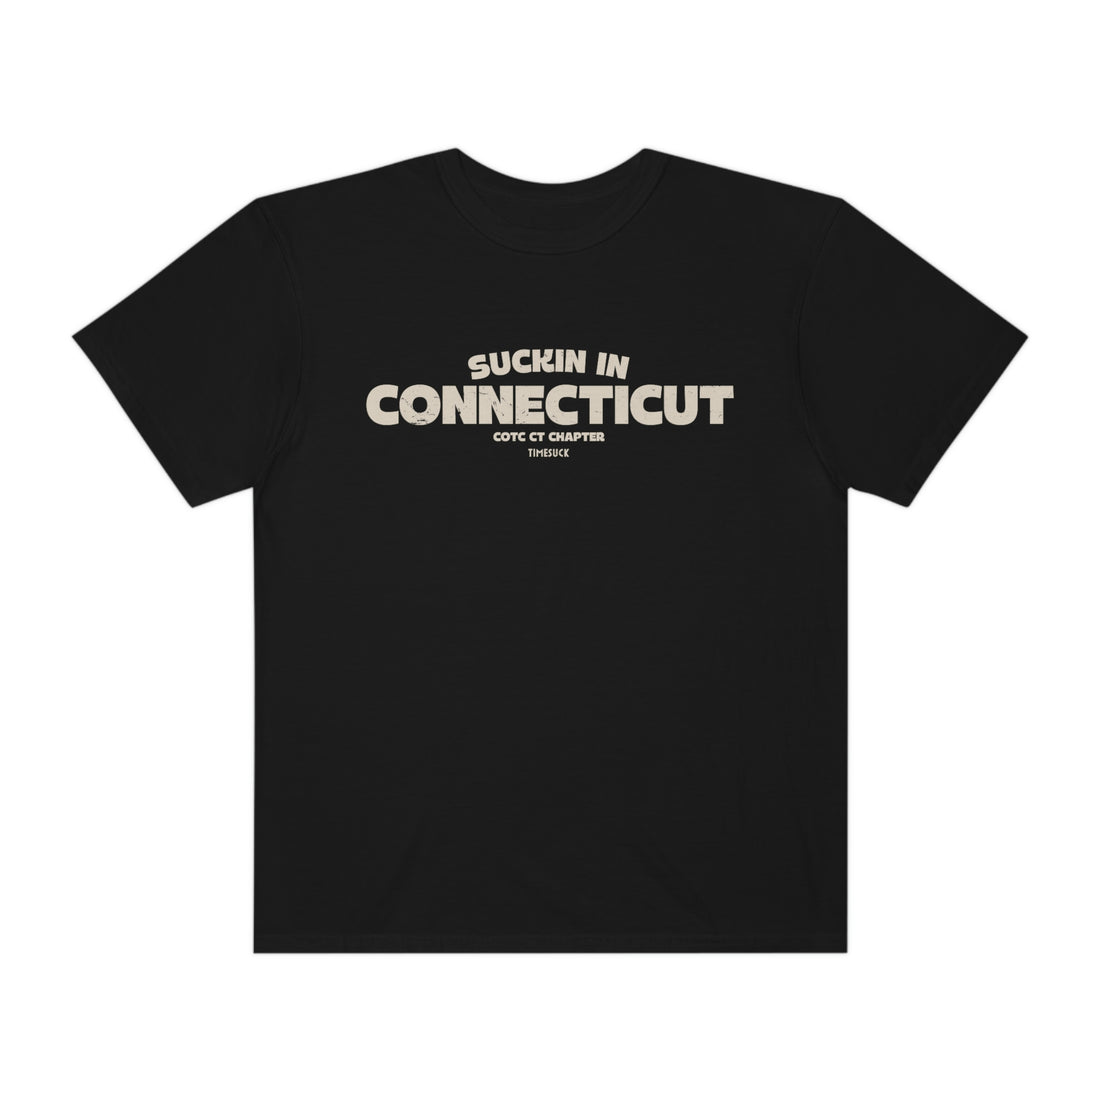 Connecticut Cult Tee